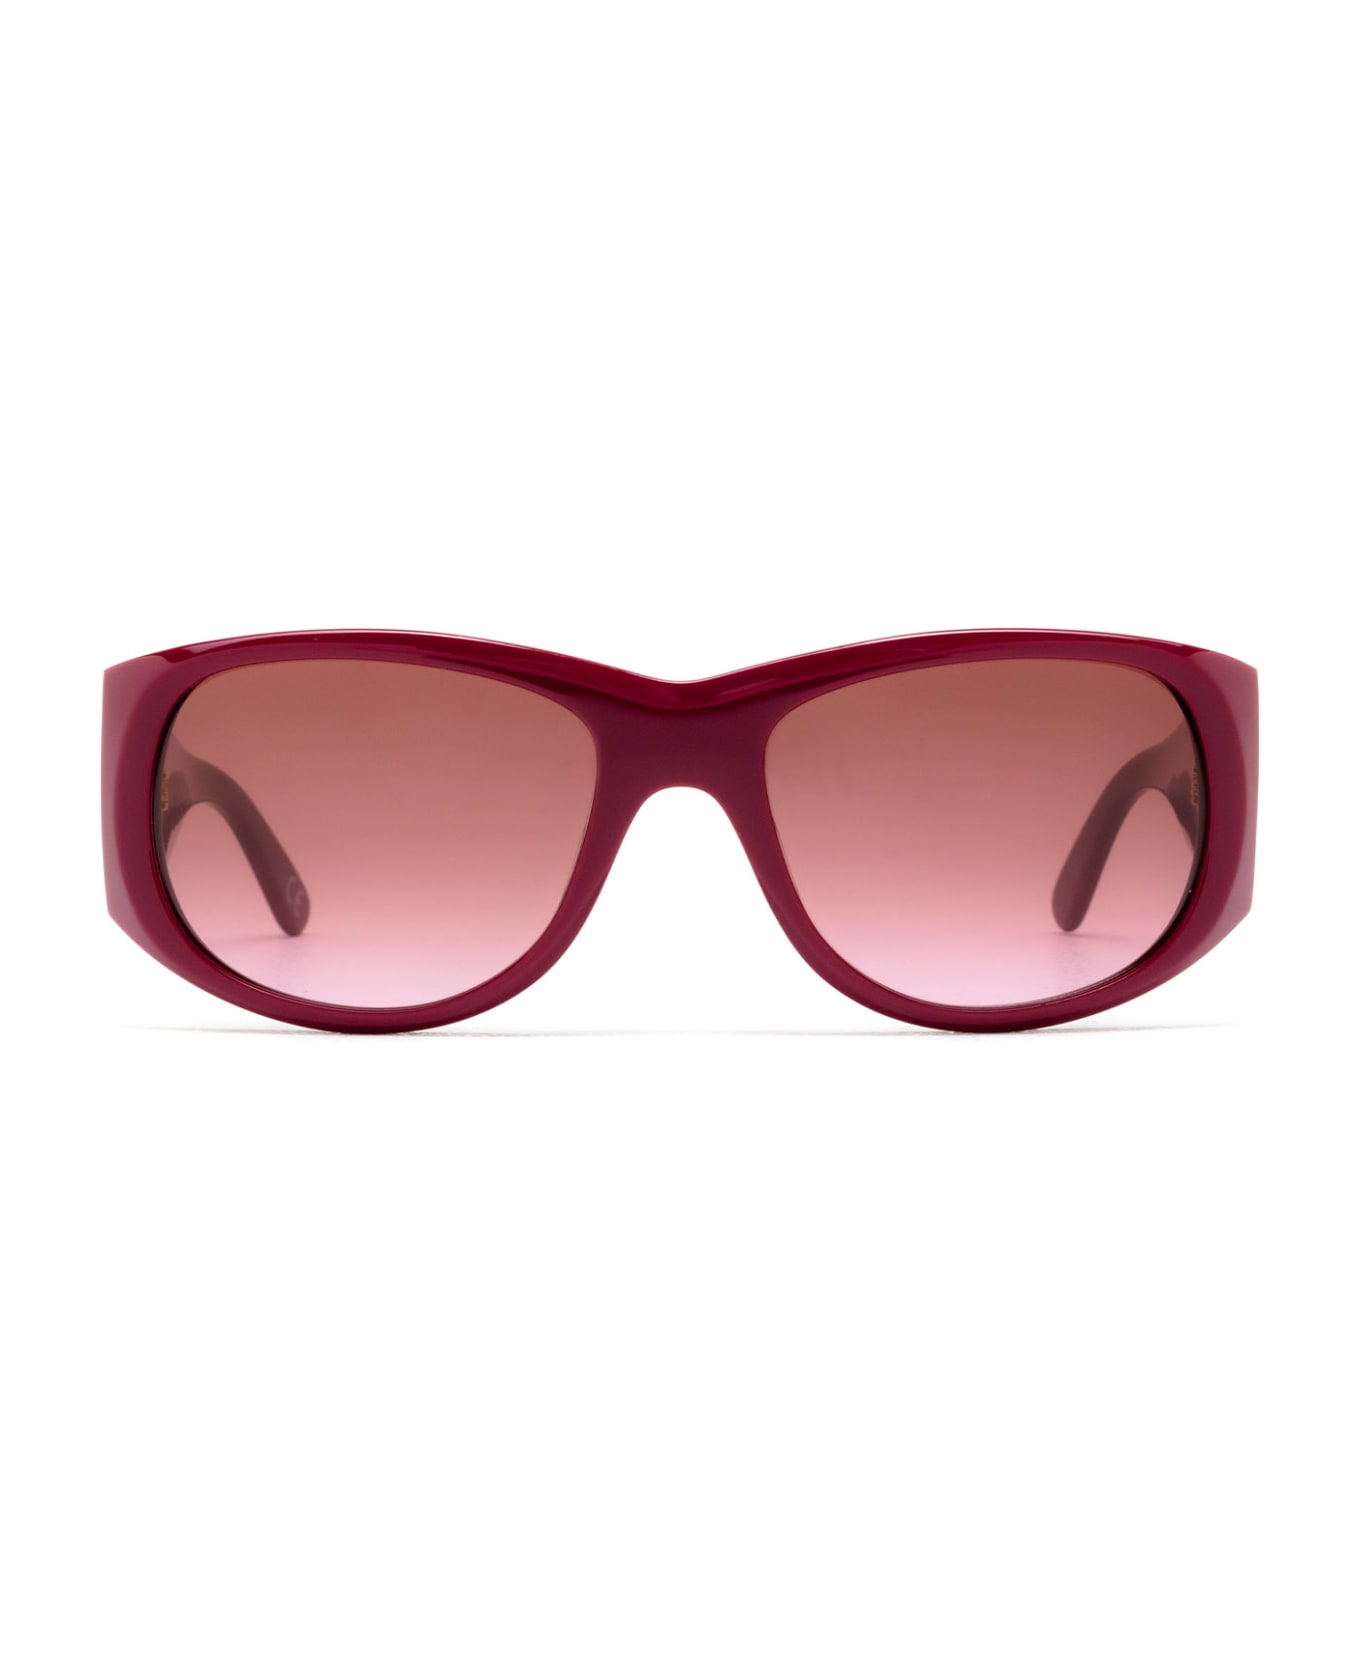 Marni Eyewear Orinoco River Bordeaux Sunglasses - Bordeaux